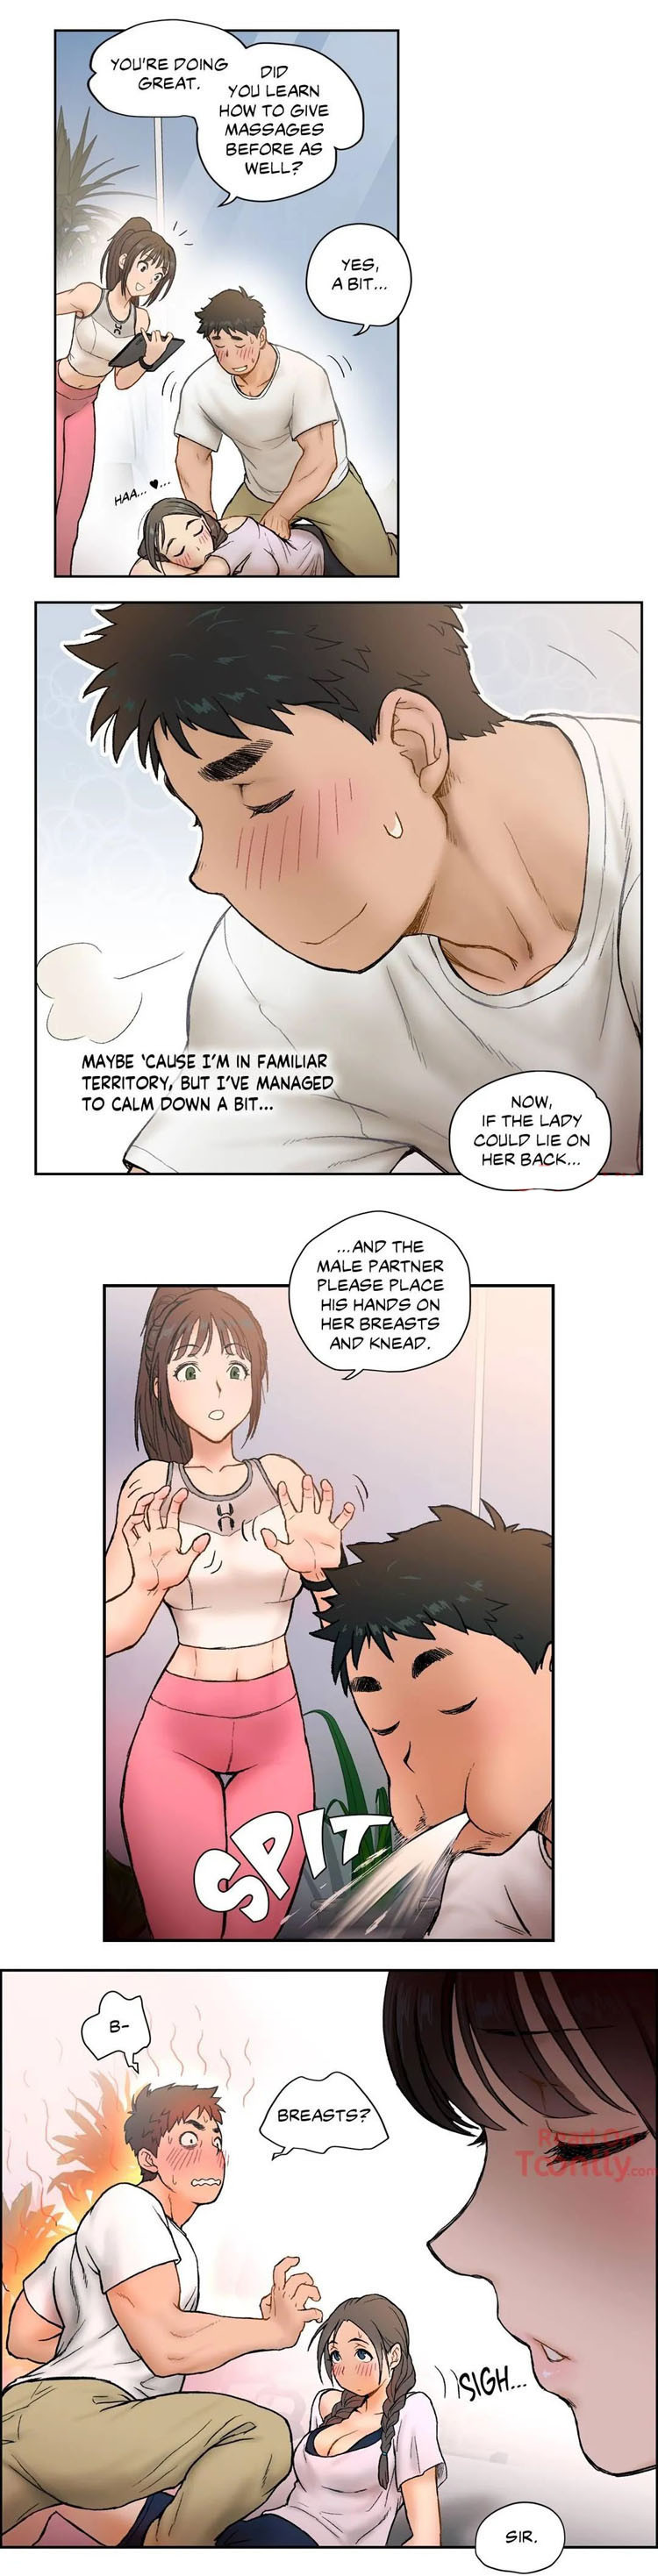 Sexersize manga